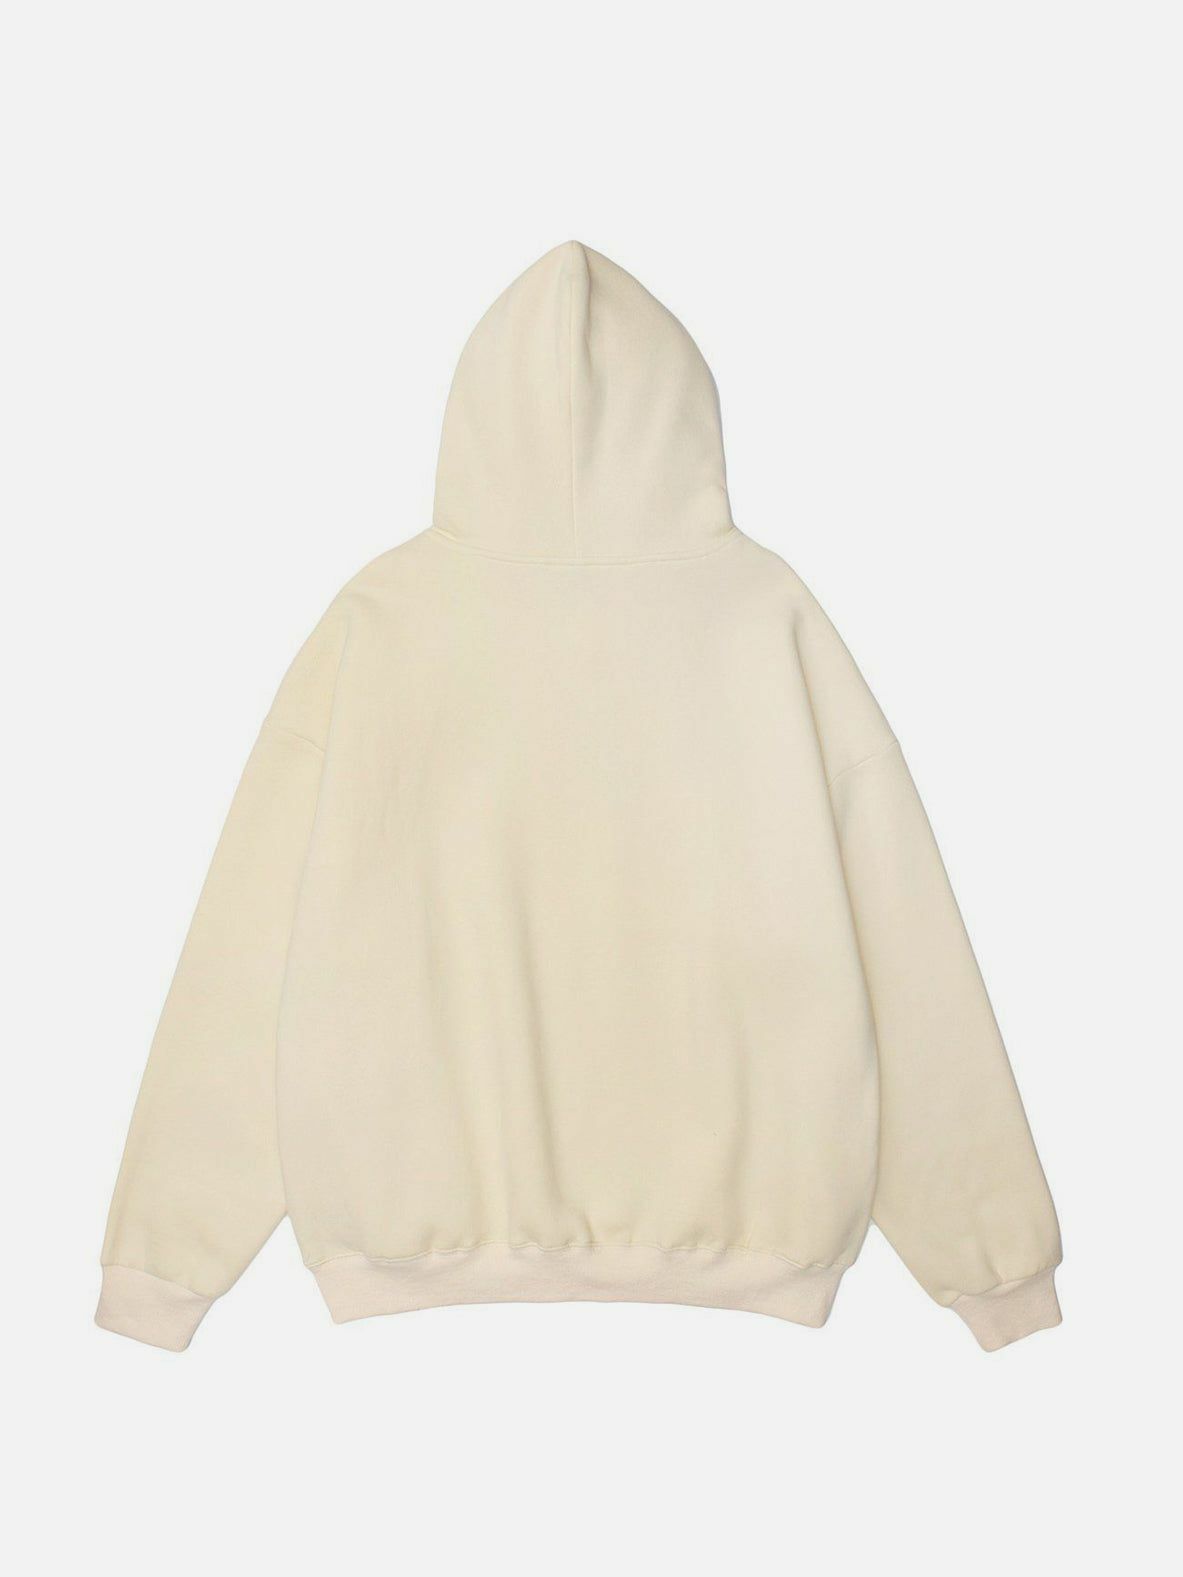 bear letter print hoodie edgy & vibrant streetwear 7708